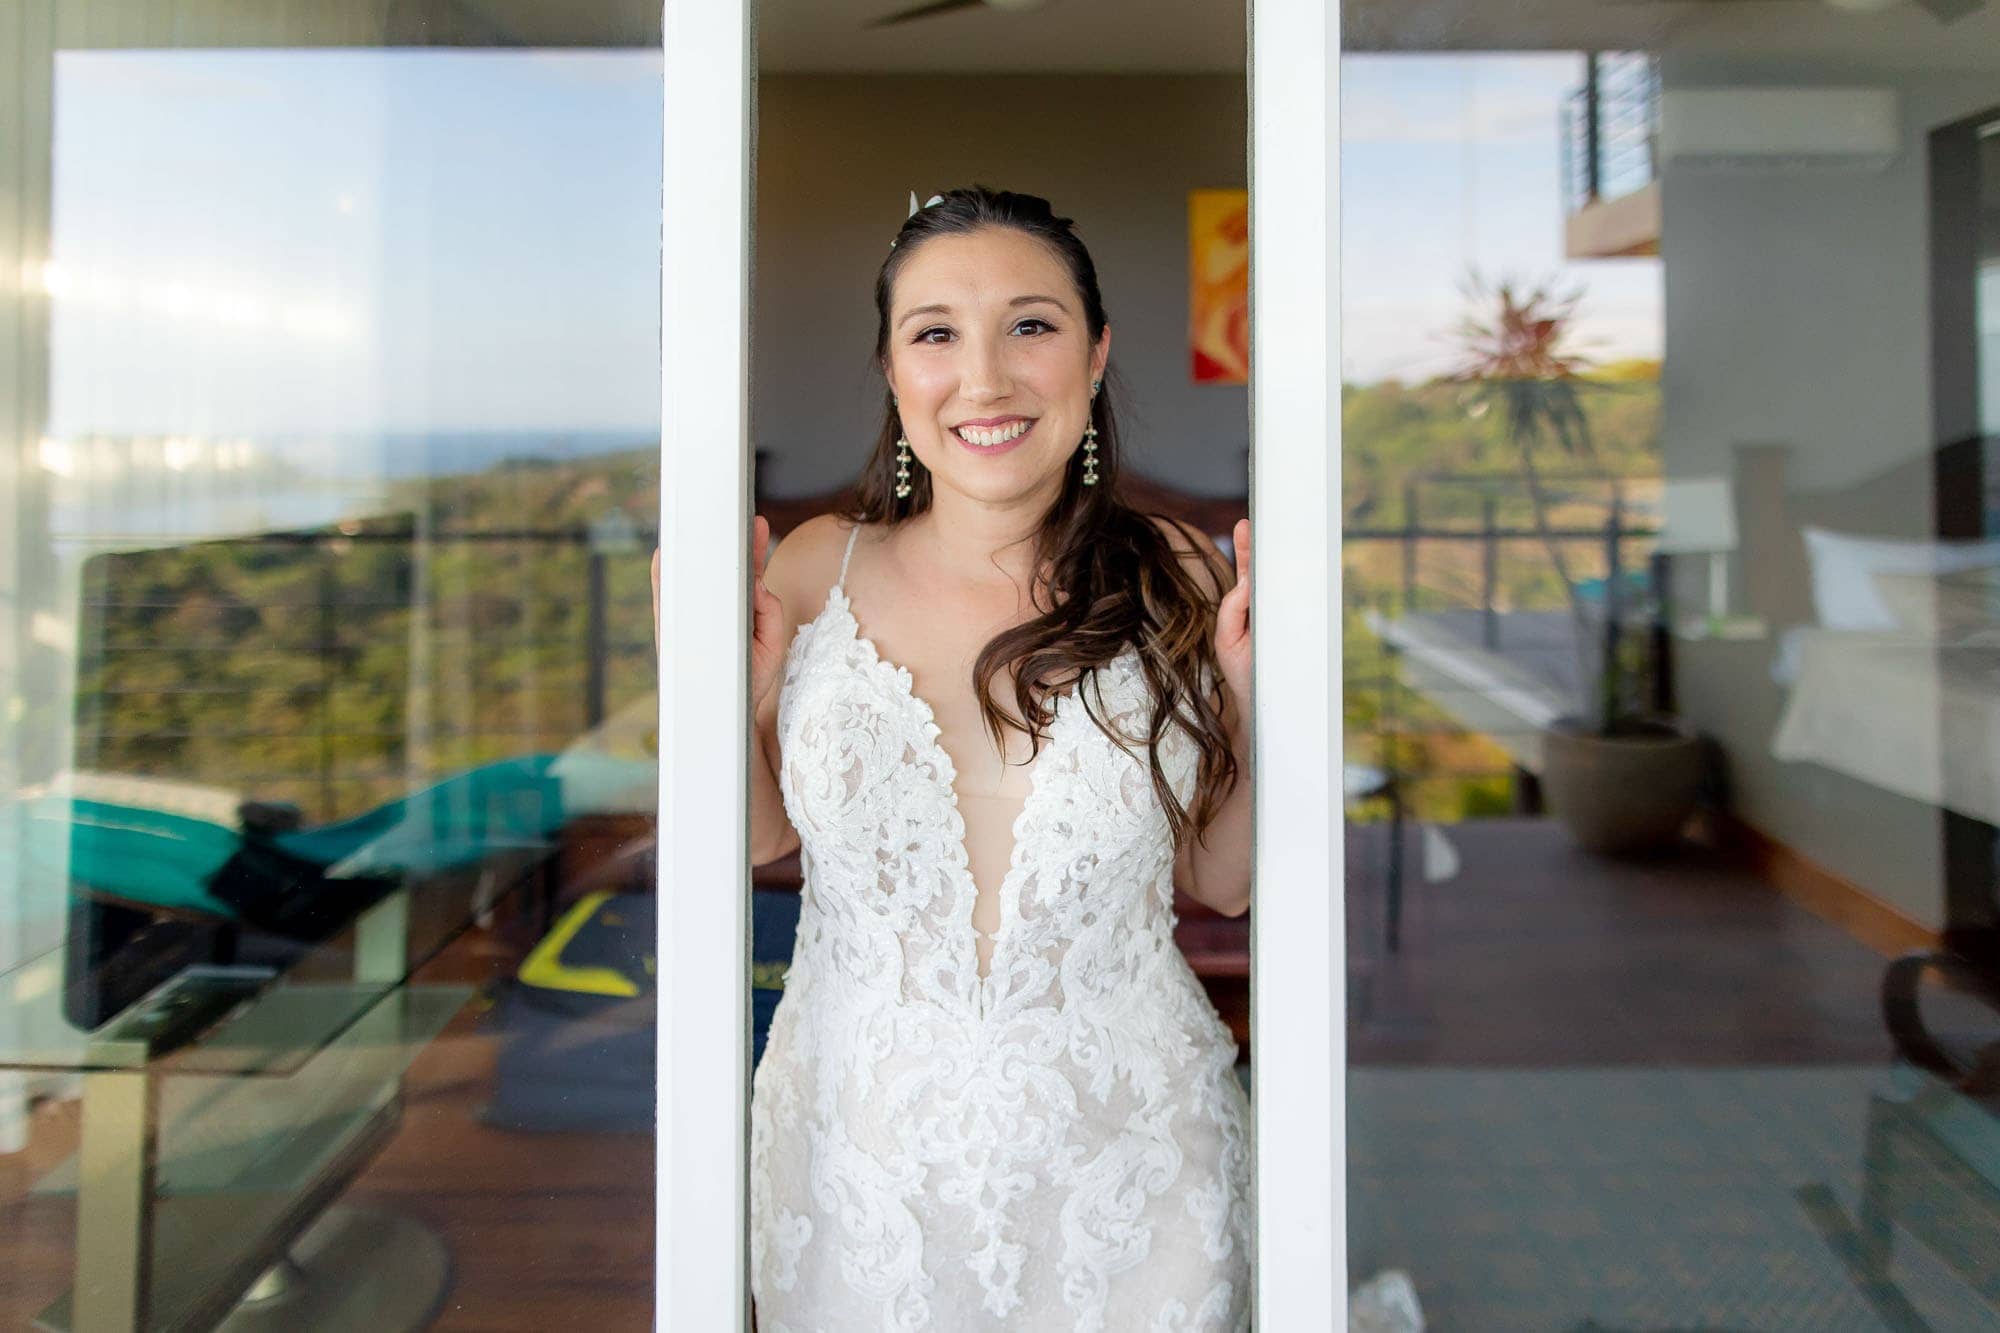 the bride peeking out between two reflective doors